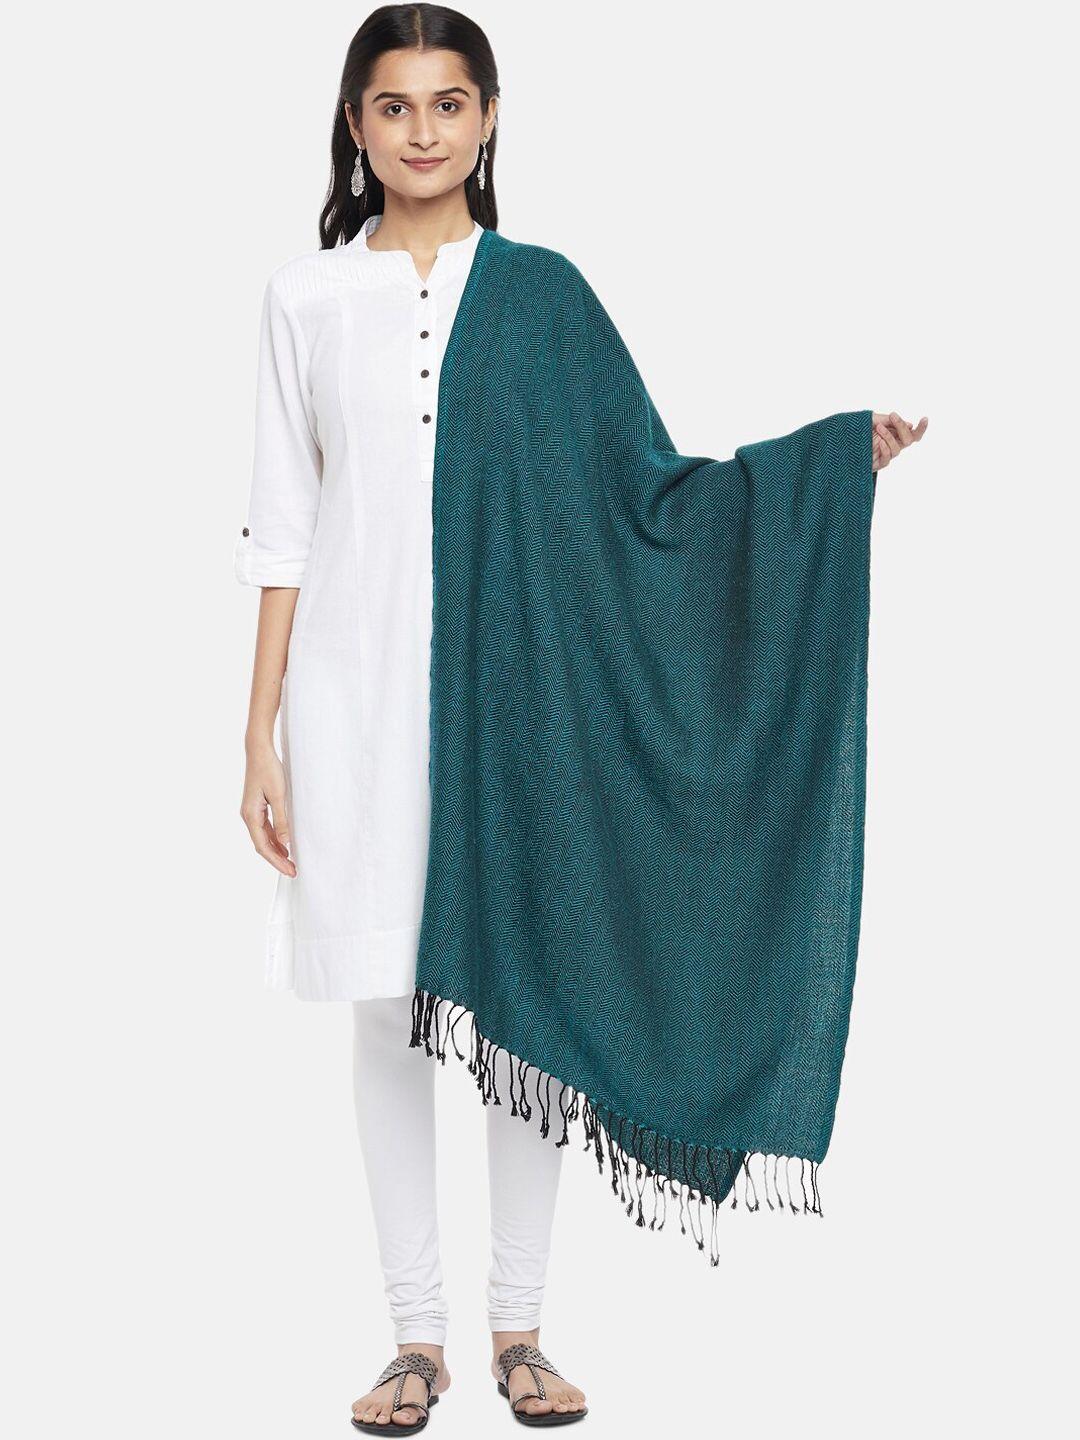 rangmanch by pantaloons women teal green blue woven design pure acrylic shawl